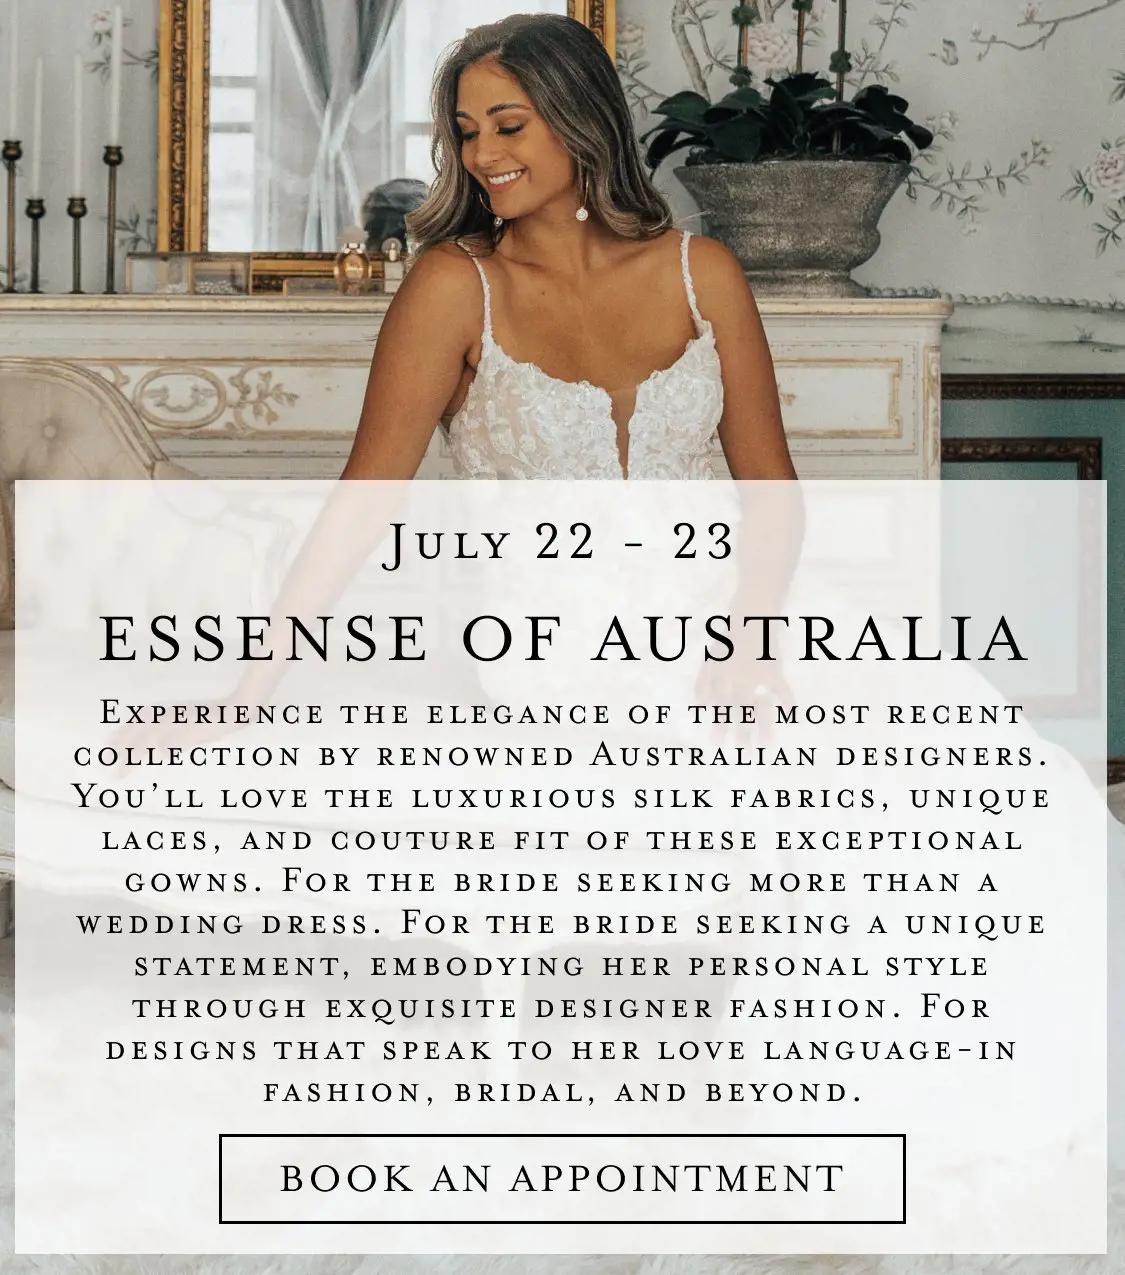 Essense of Australia trunk show at Bella Bridal Gallery